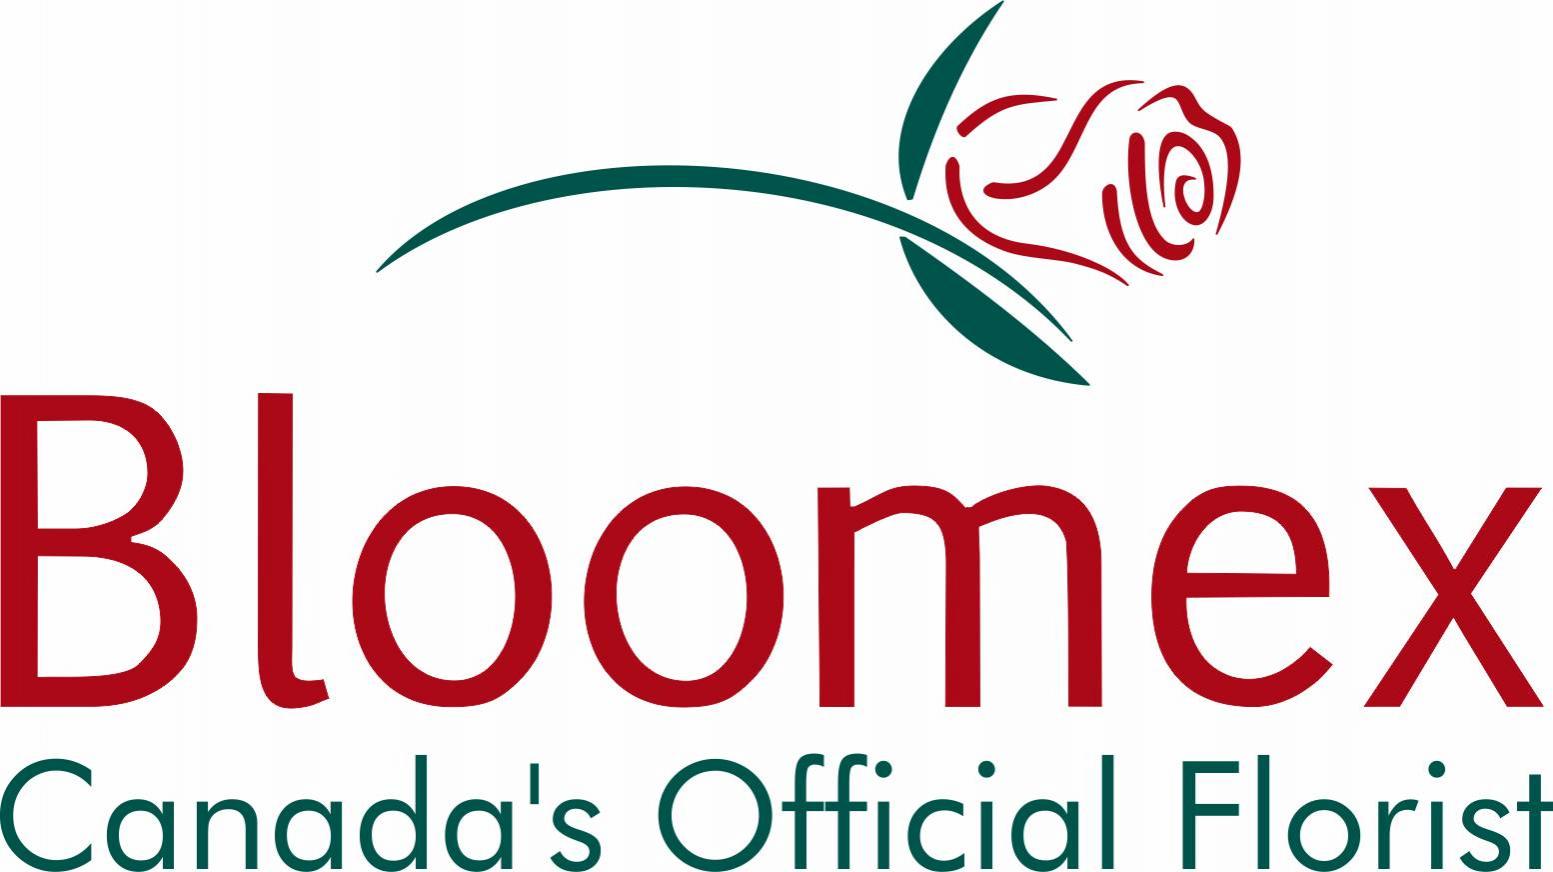 Bloomex Logo